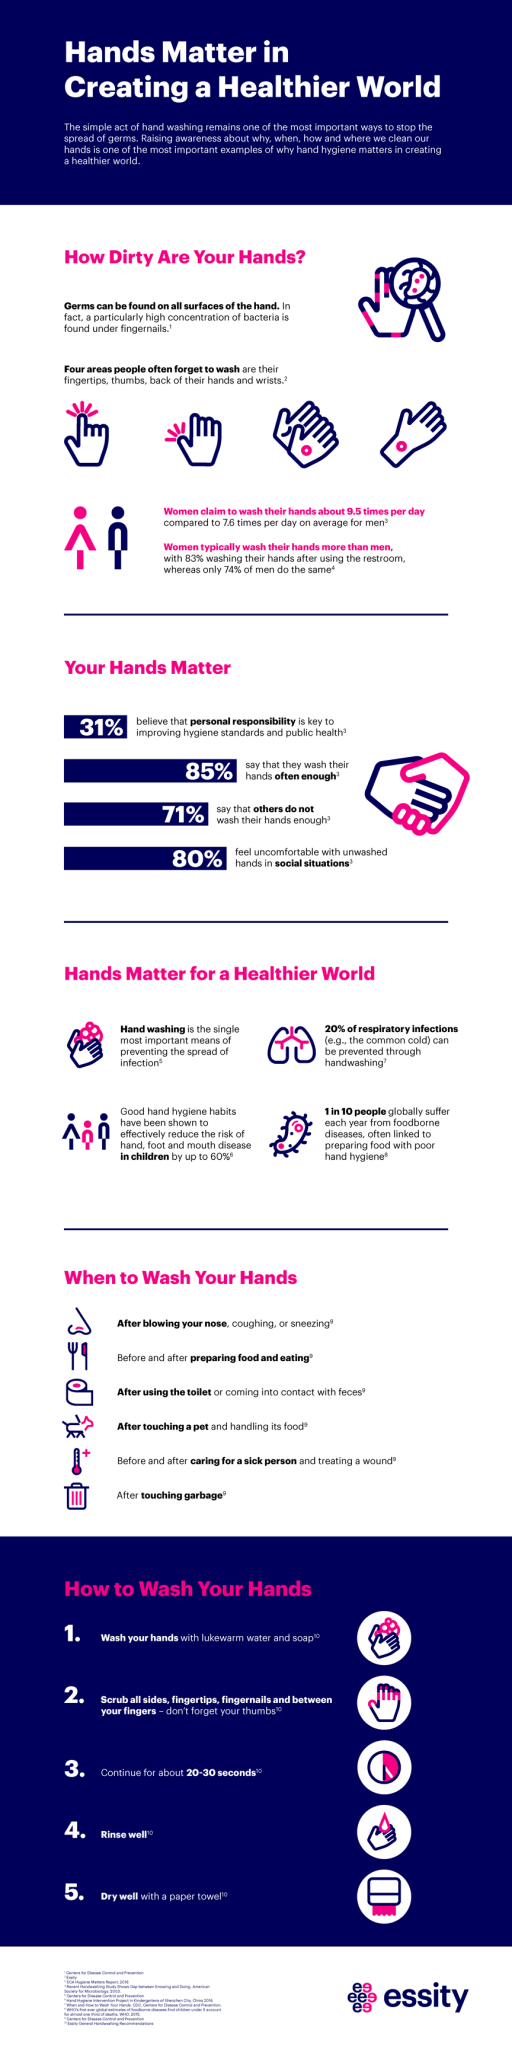 Hands Matter in Creating a Healthier World